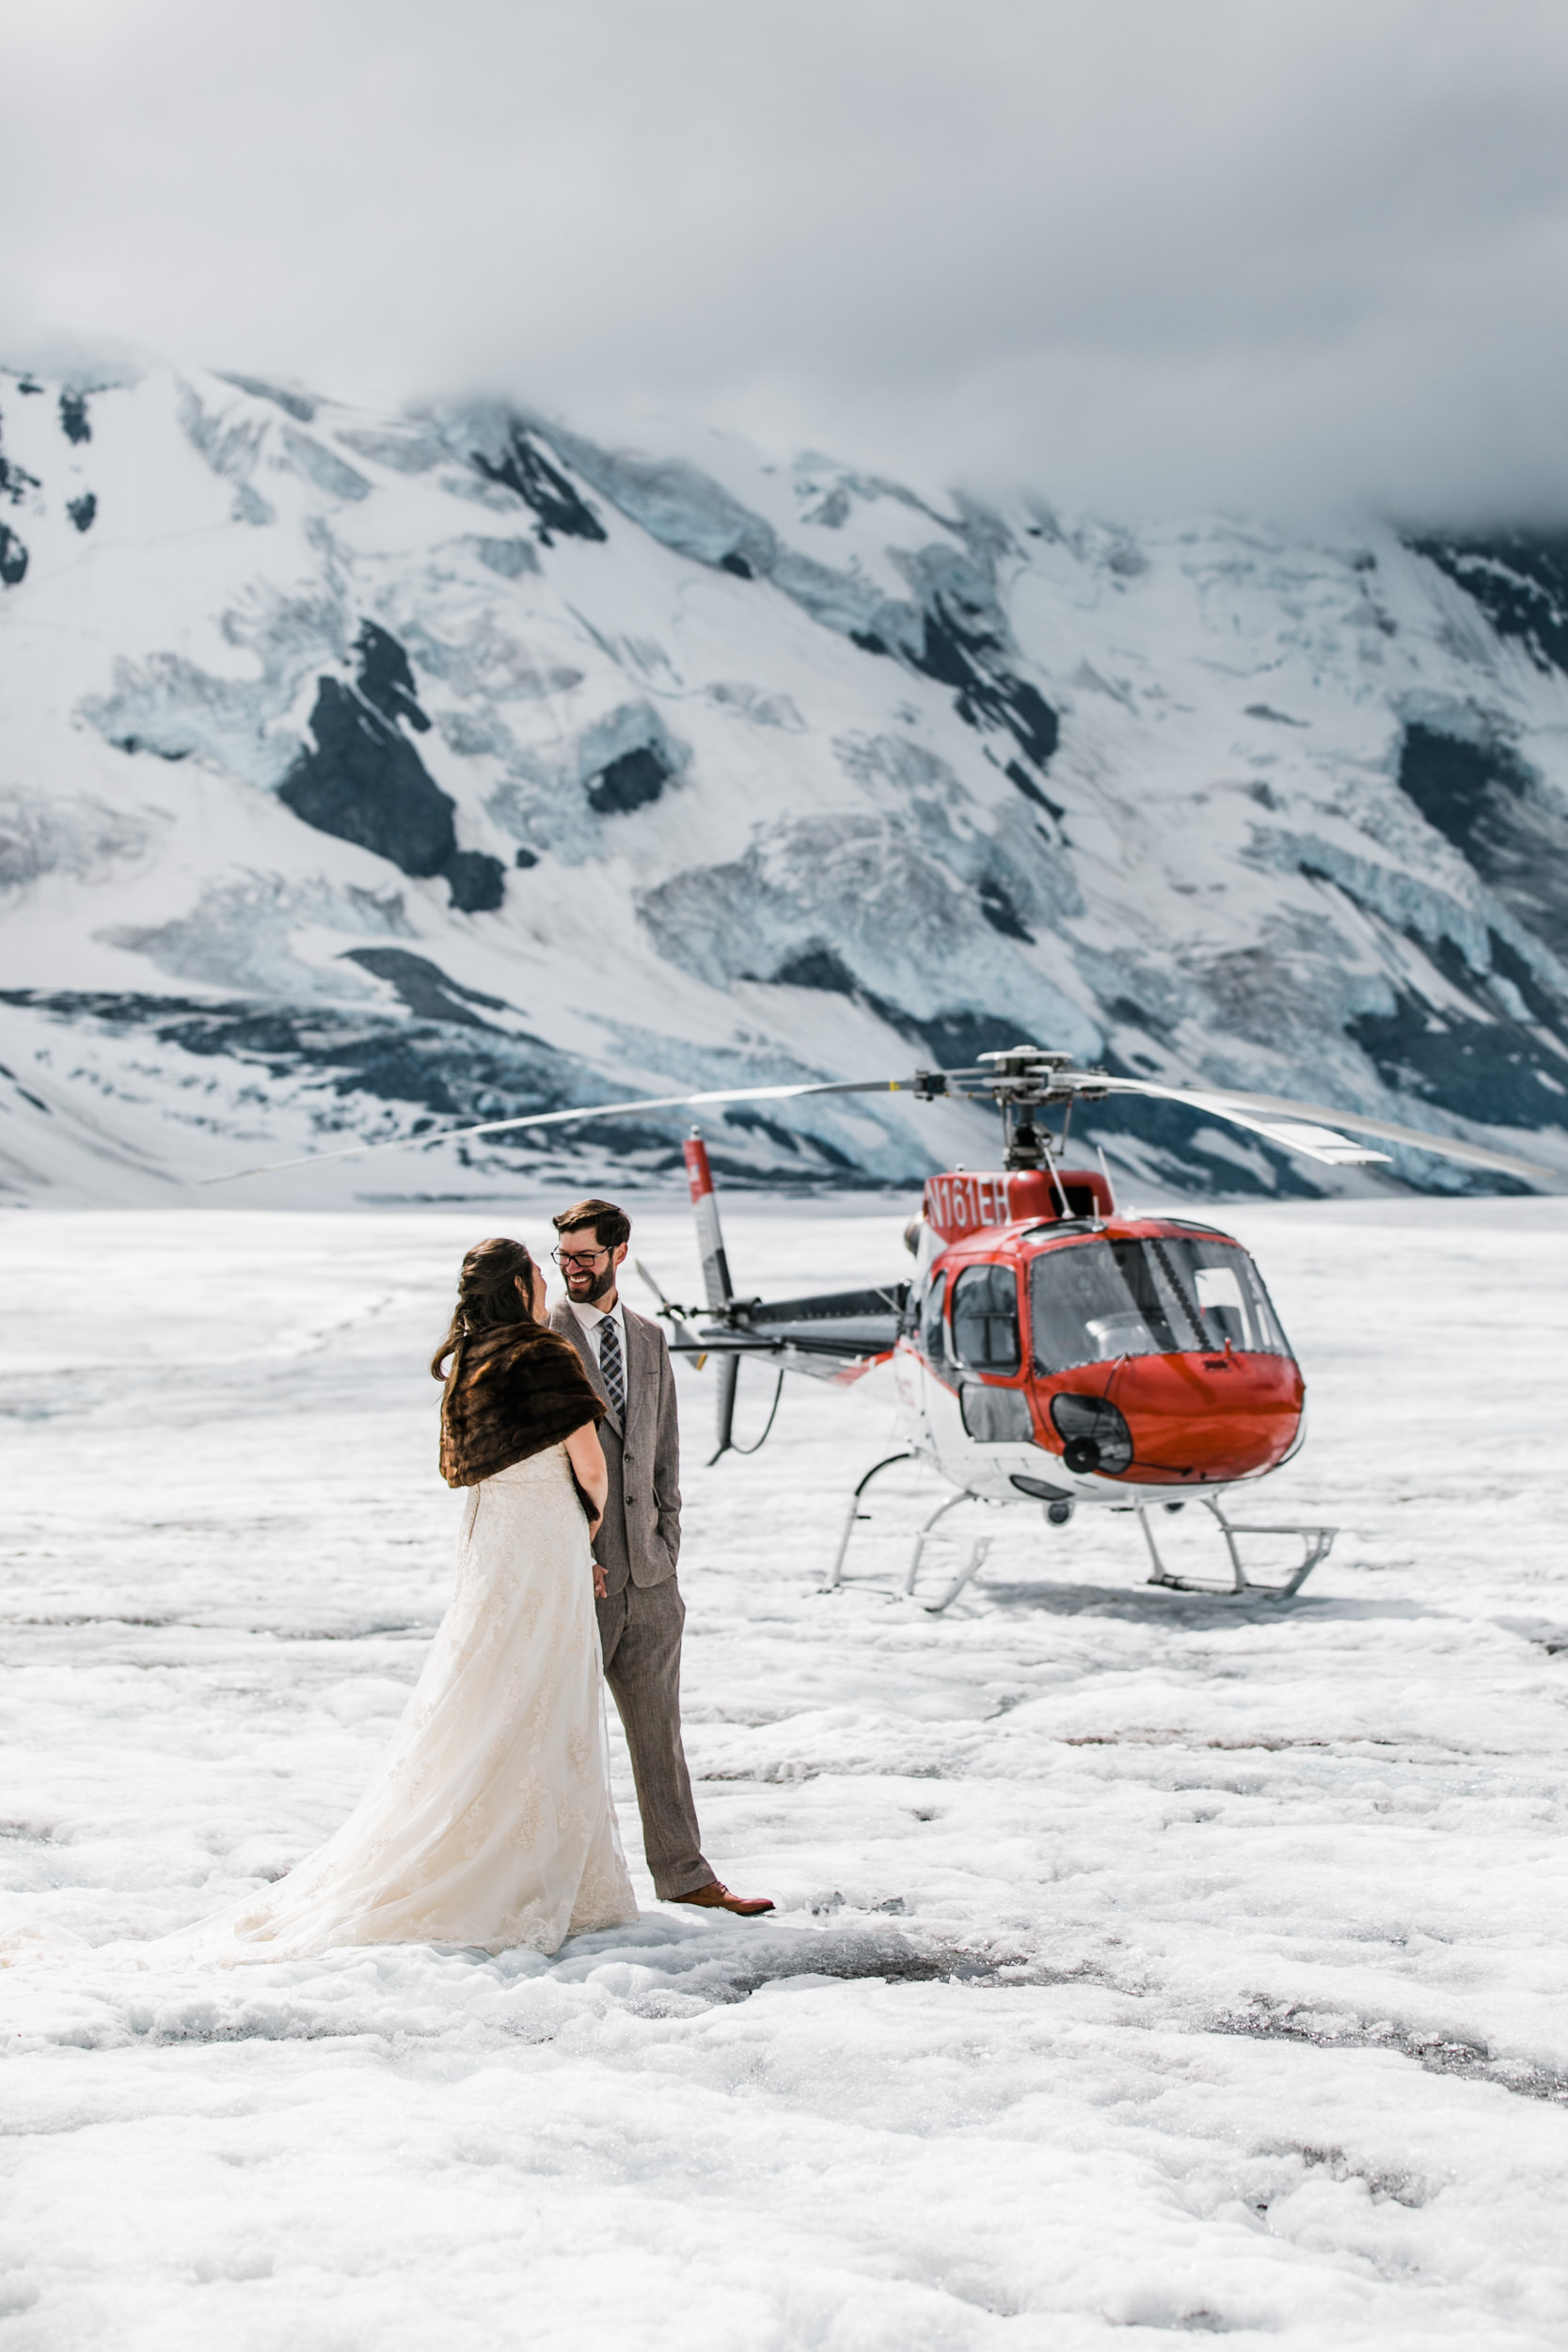 helicopter flightseeing tour in denali national park | alaska destination elopement inspiration | heli wedding in alaska | the hearnes adventure photography | www.thehearnes.com